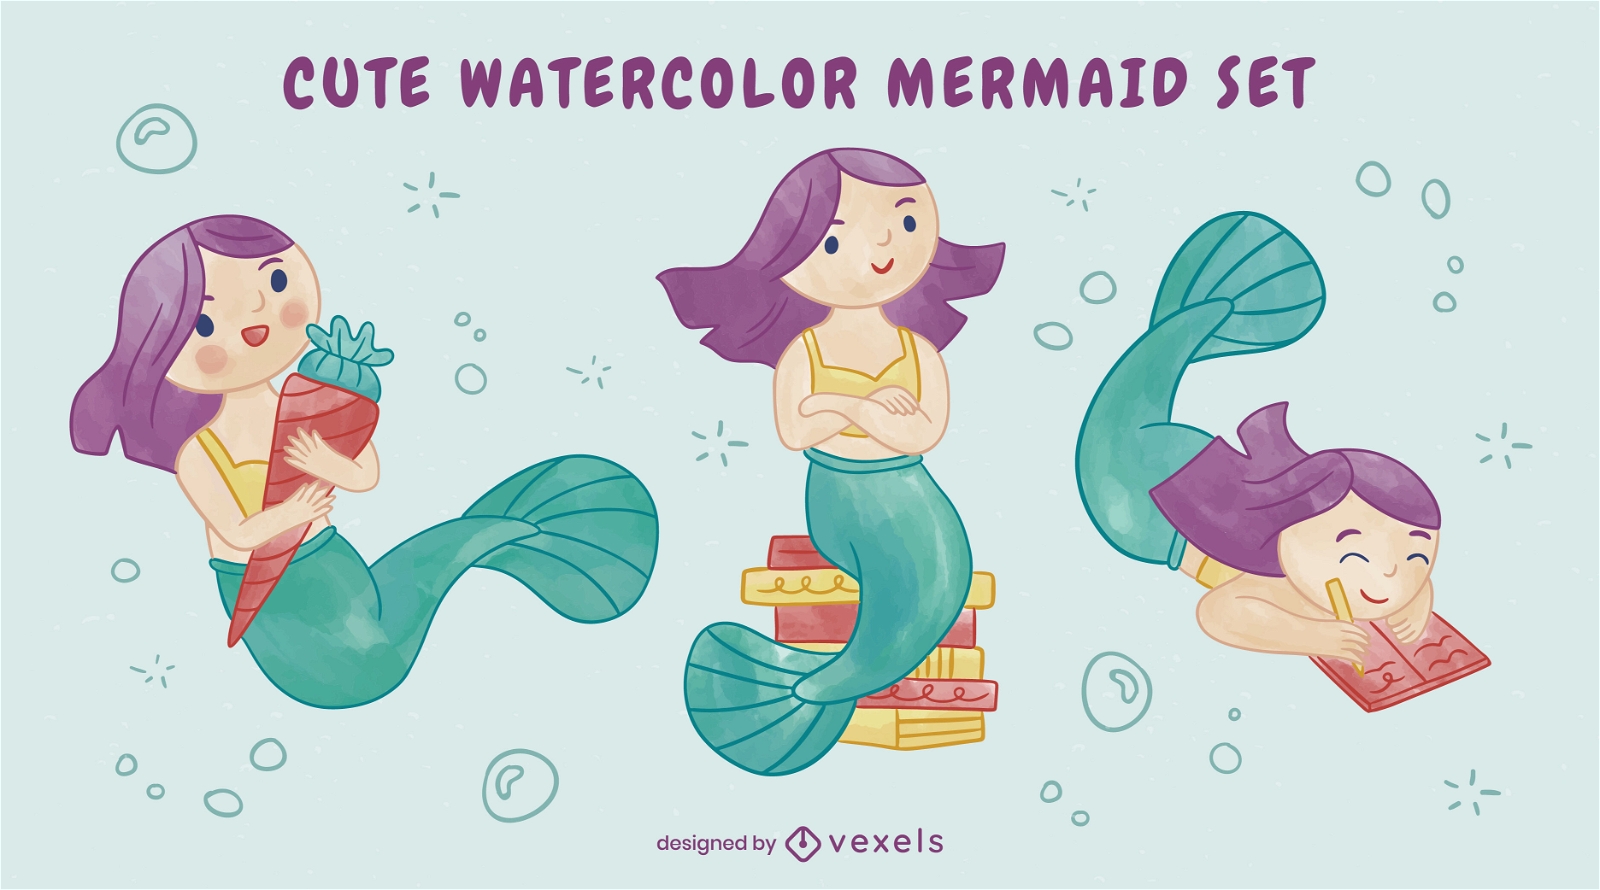 Cute mermaid watercolor illustration set 